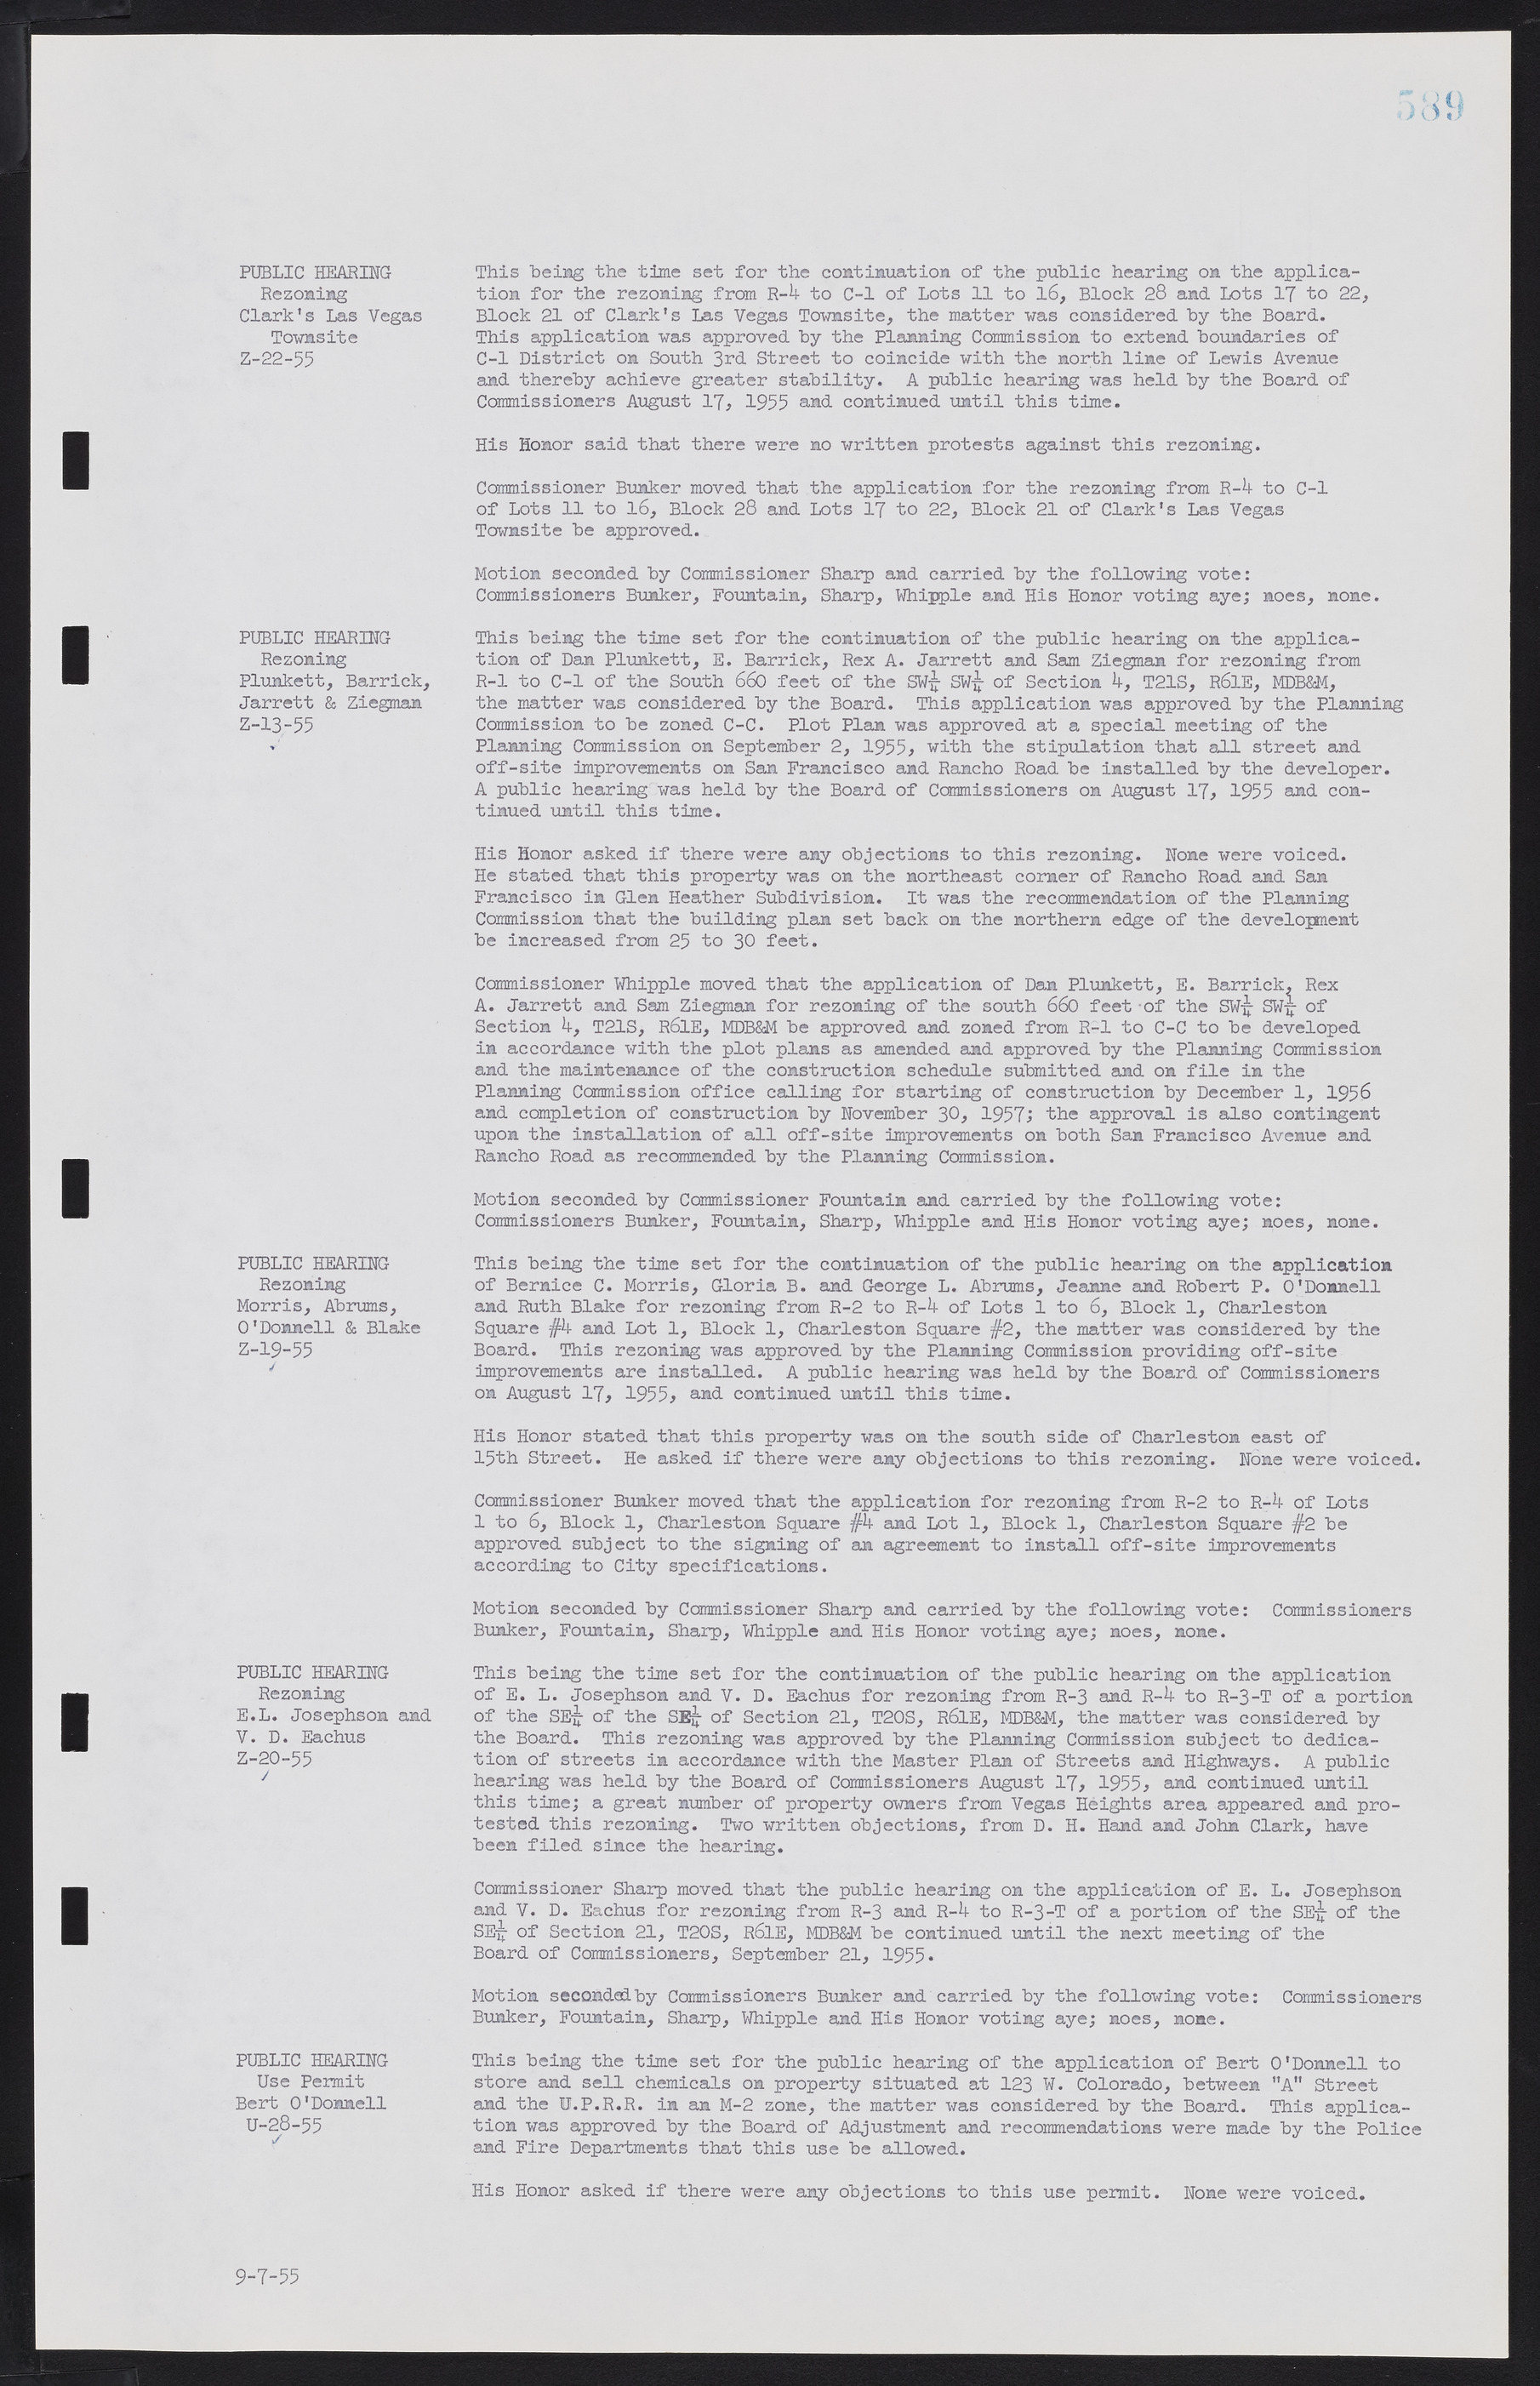 Las Vegas City Commission Minutes, February 17, 1954 to September 21, 1955, lvc000009-595